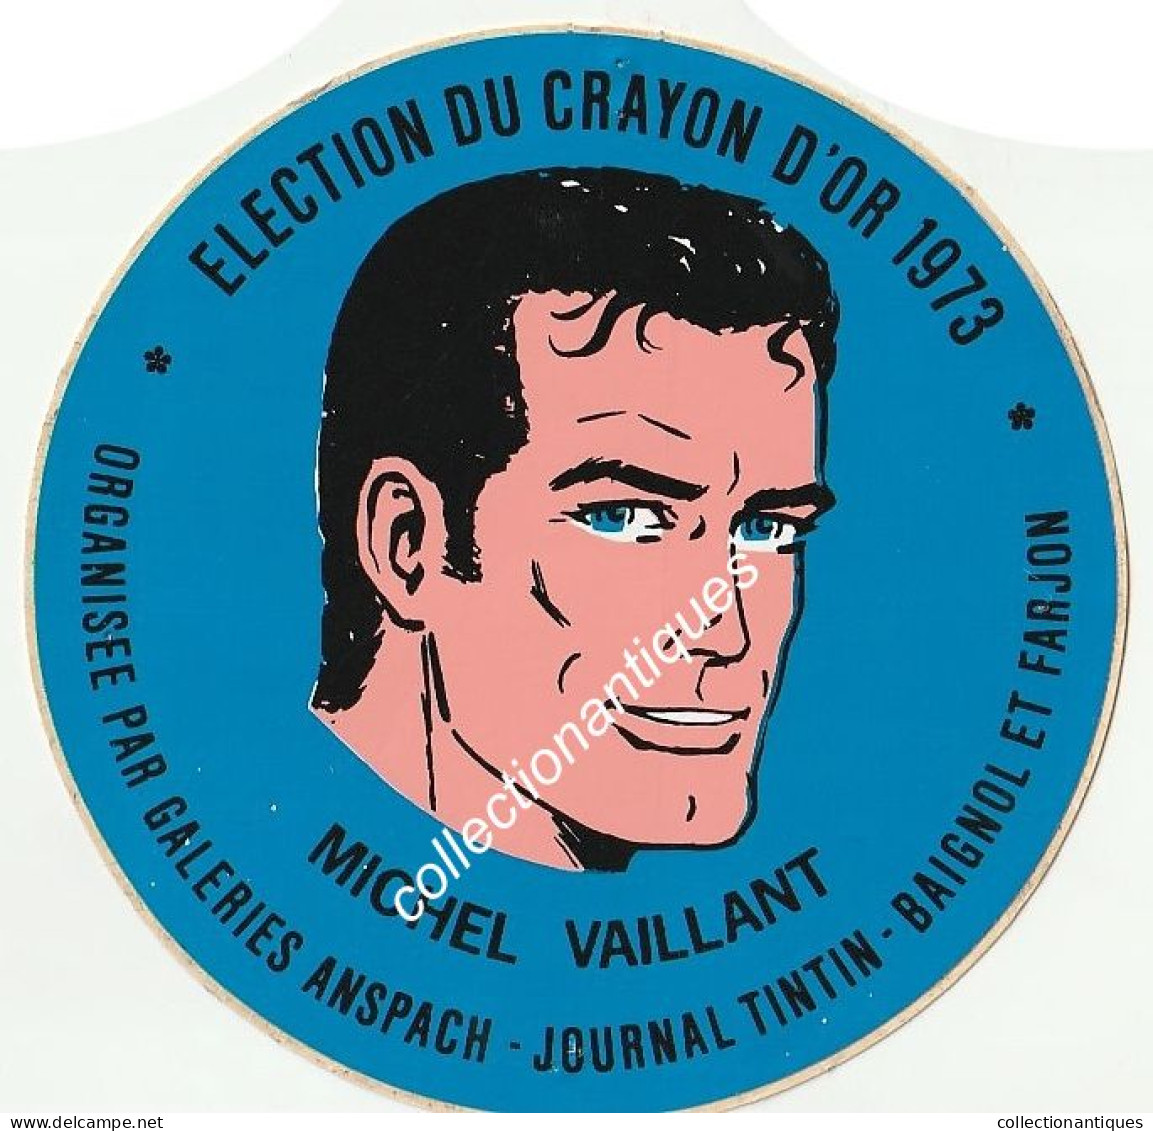 Michel Vaillant RARE Sticker Autocollant Election Du Crayon D'Or 1973 Galeries Anspach Journal Tintin Baignol Et Farjon - Stickers